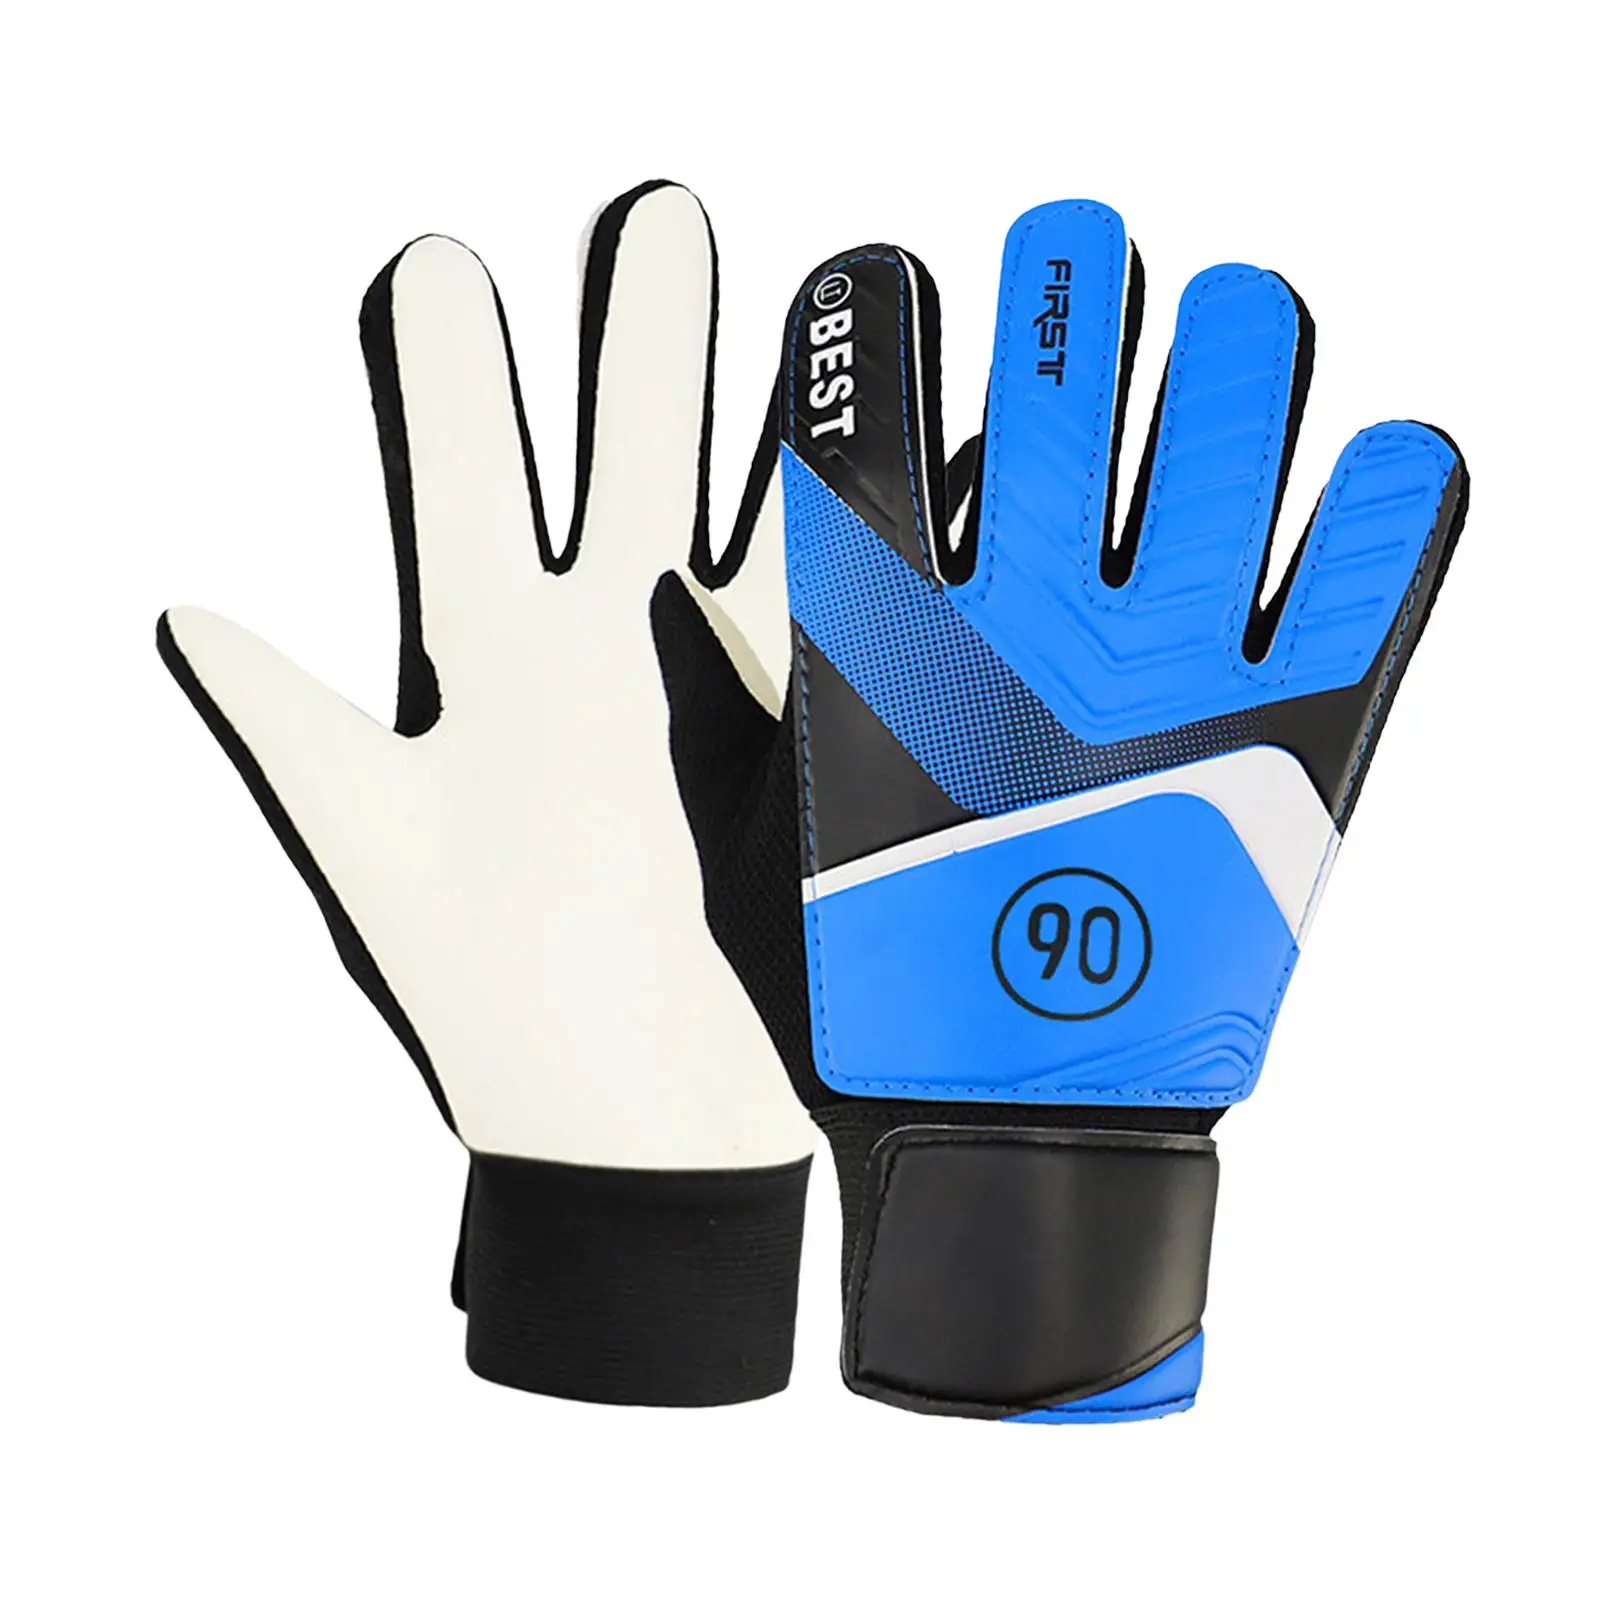 Goalie Goalkeeper Gloves Professional Goalkeeper Gloves, Soccer Football Training Goalkeeper Gloves Finger Protector